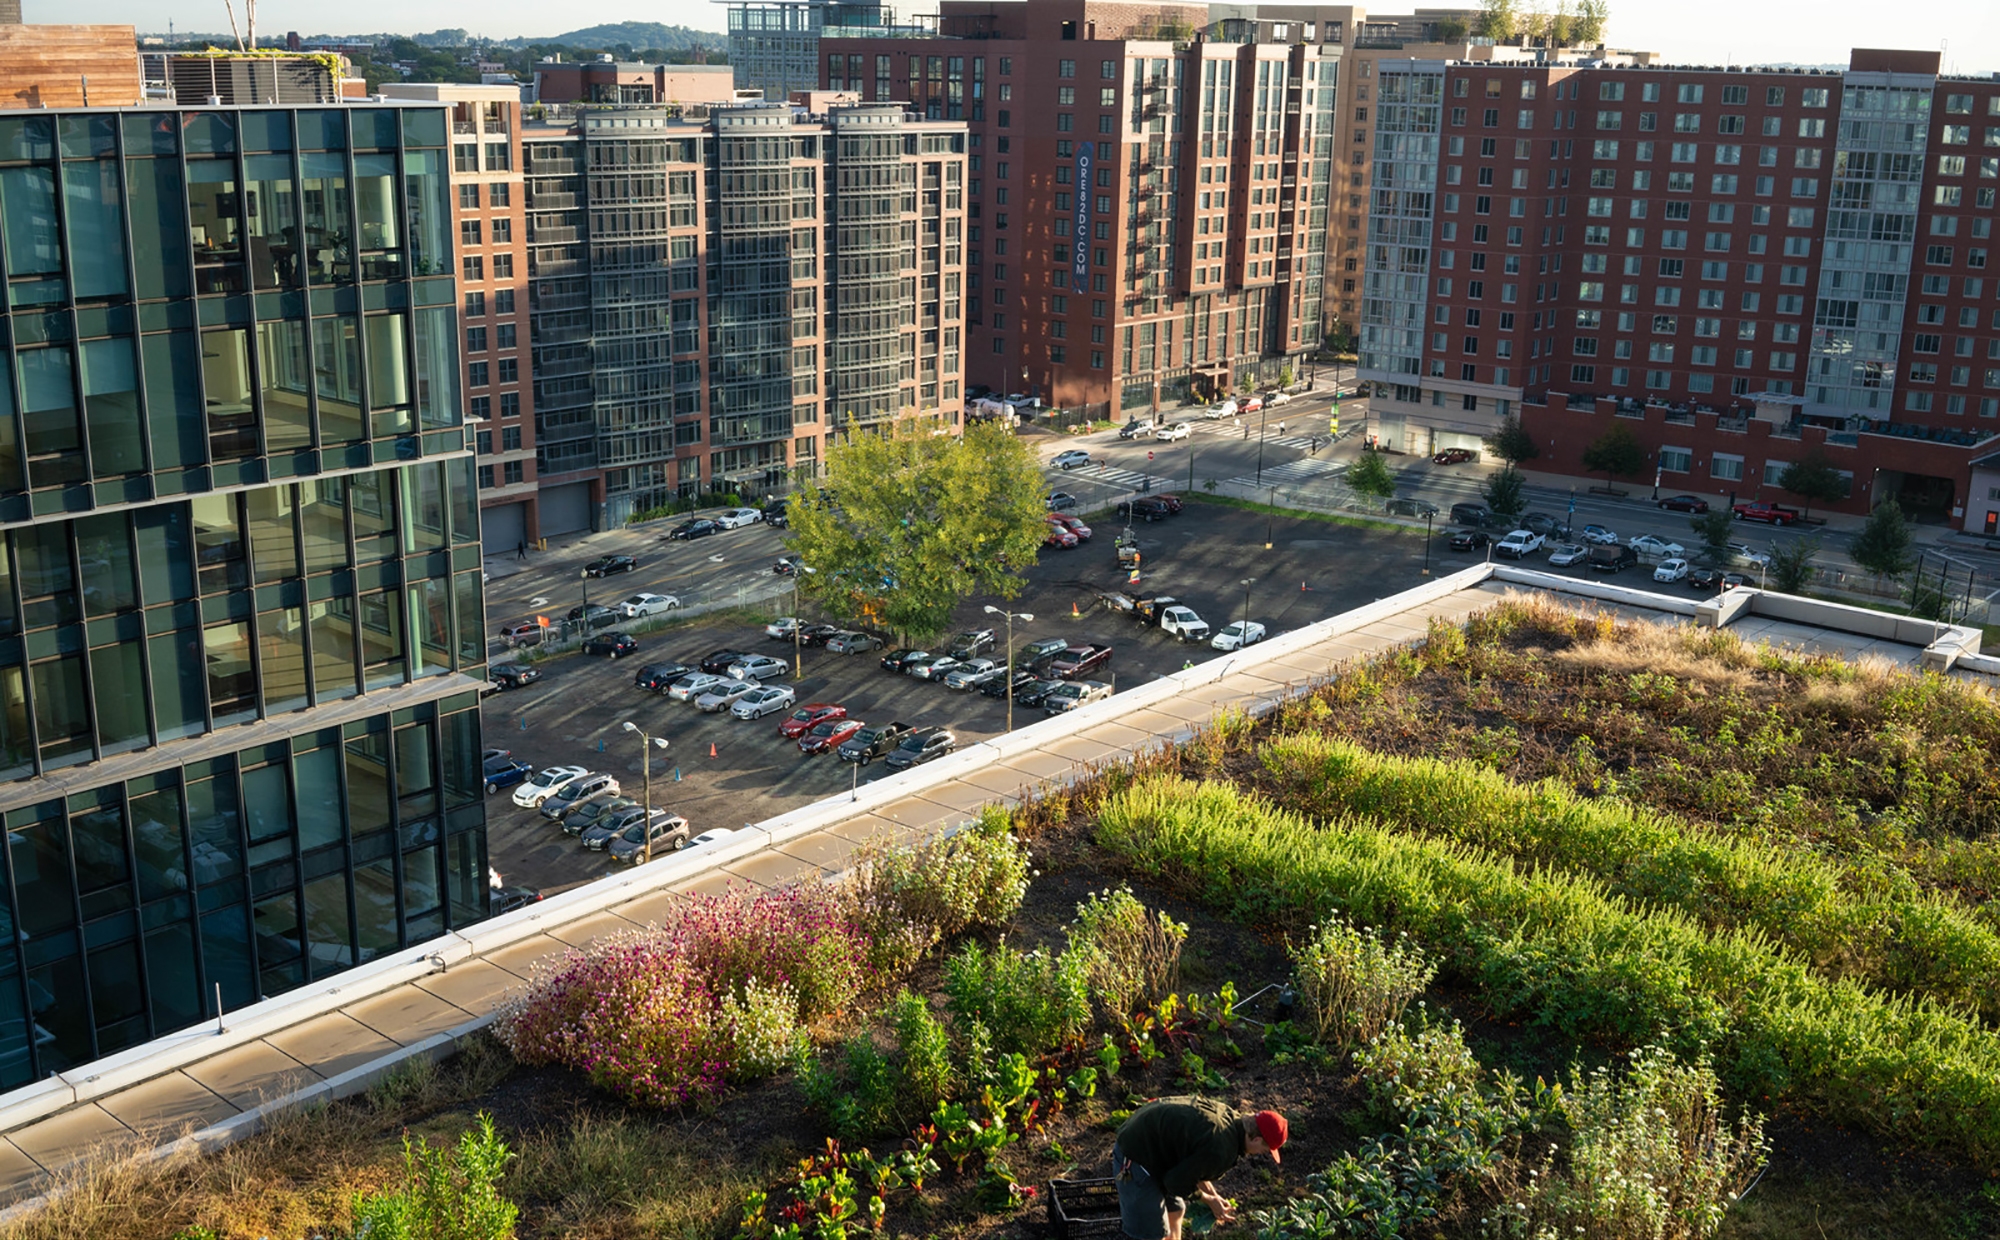 Rooftop garden in an urban setting.